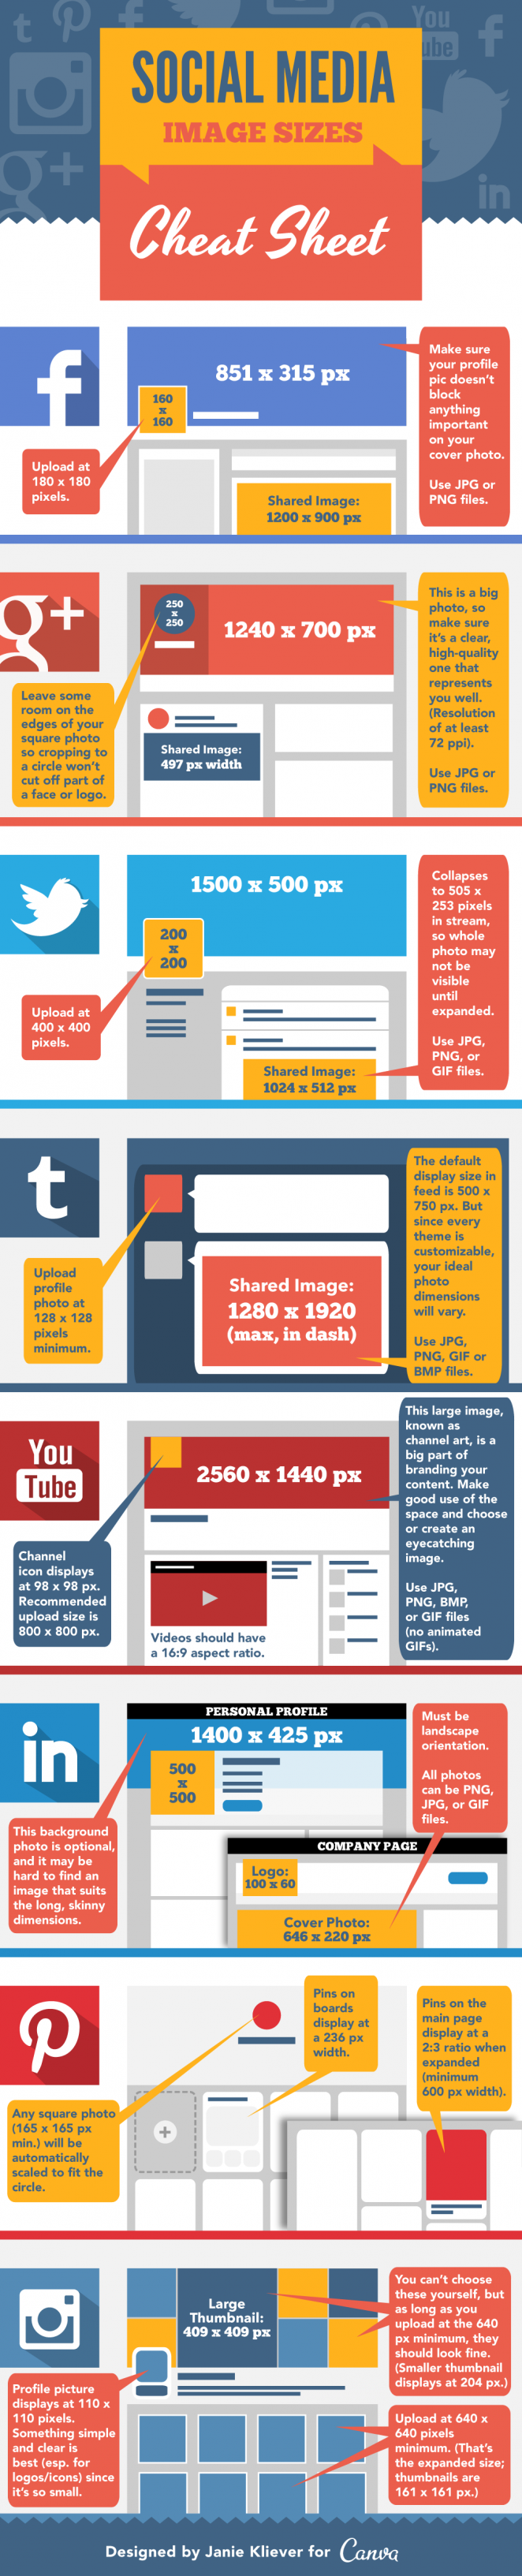 Canva_social-media-image-sizes-infographic-2-662x3266